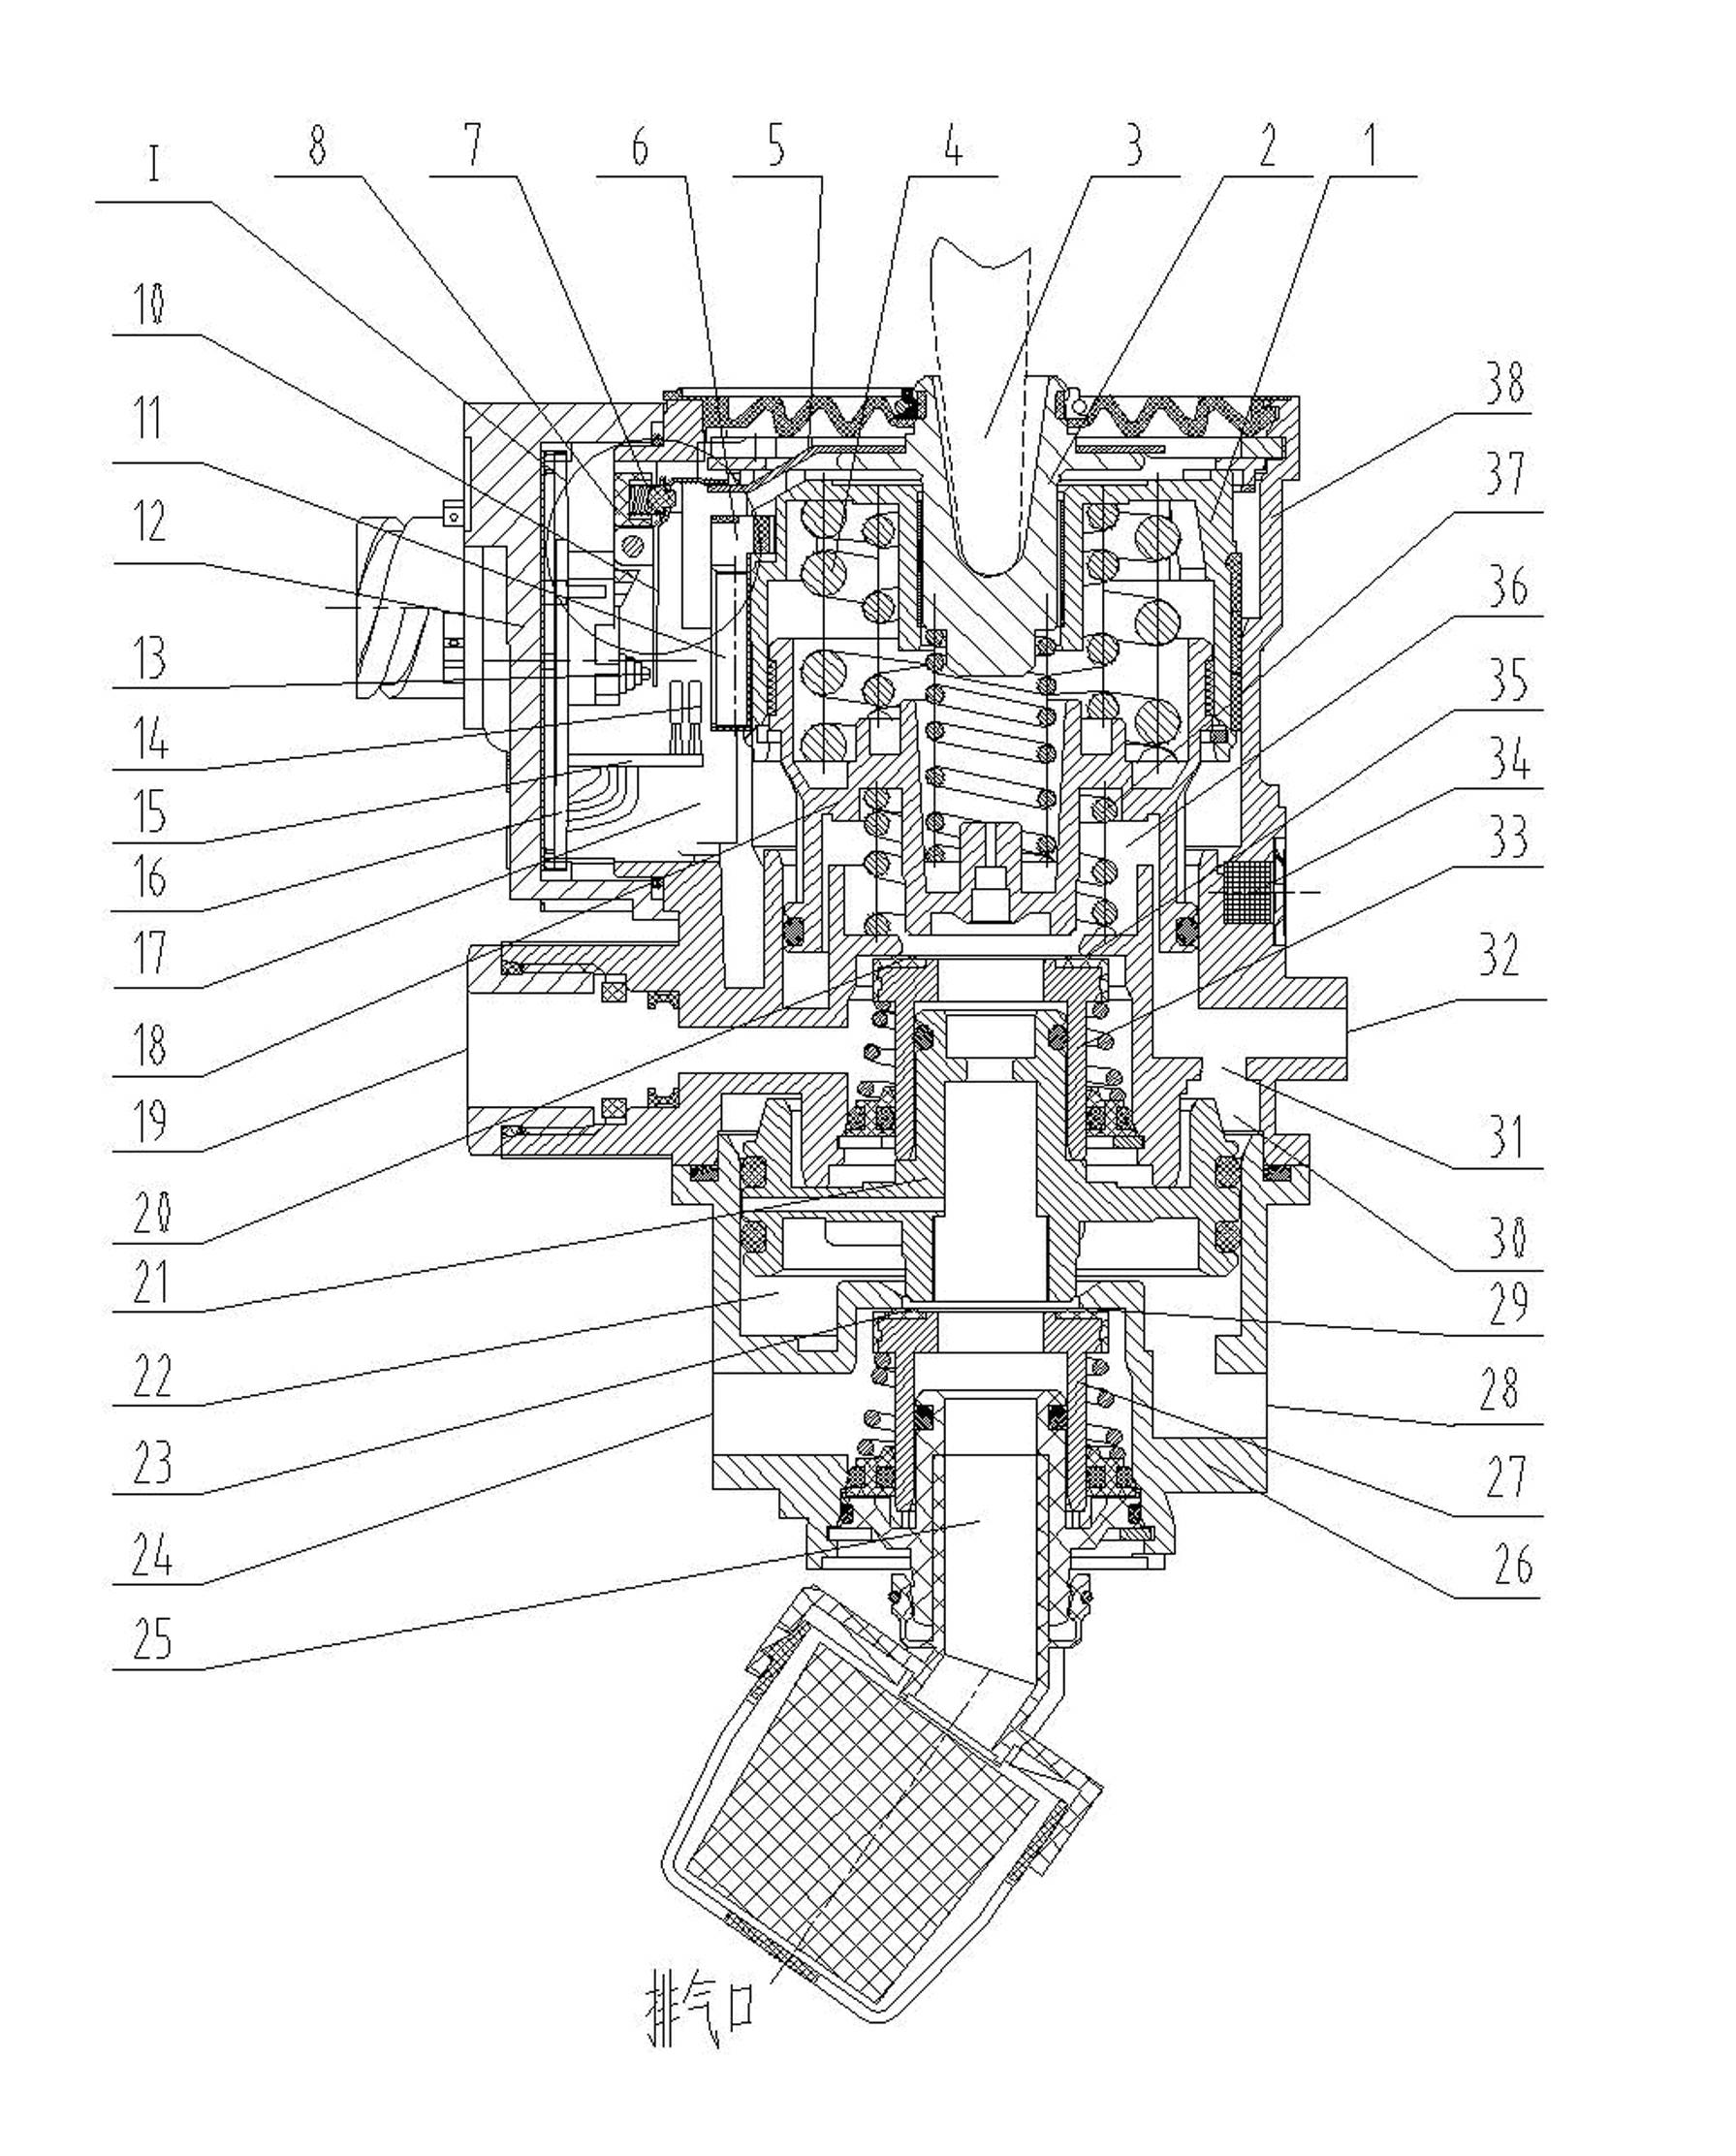 Main brake valve with electronic-control pneumatic-control dual-circuit signals